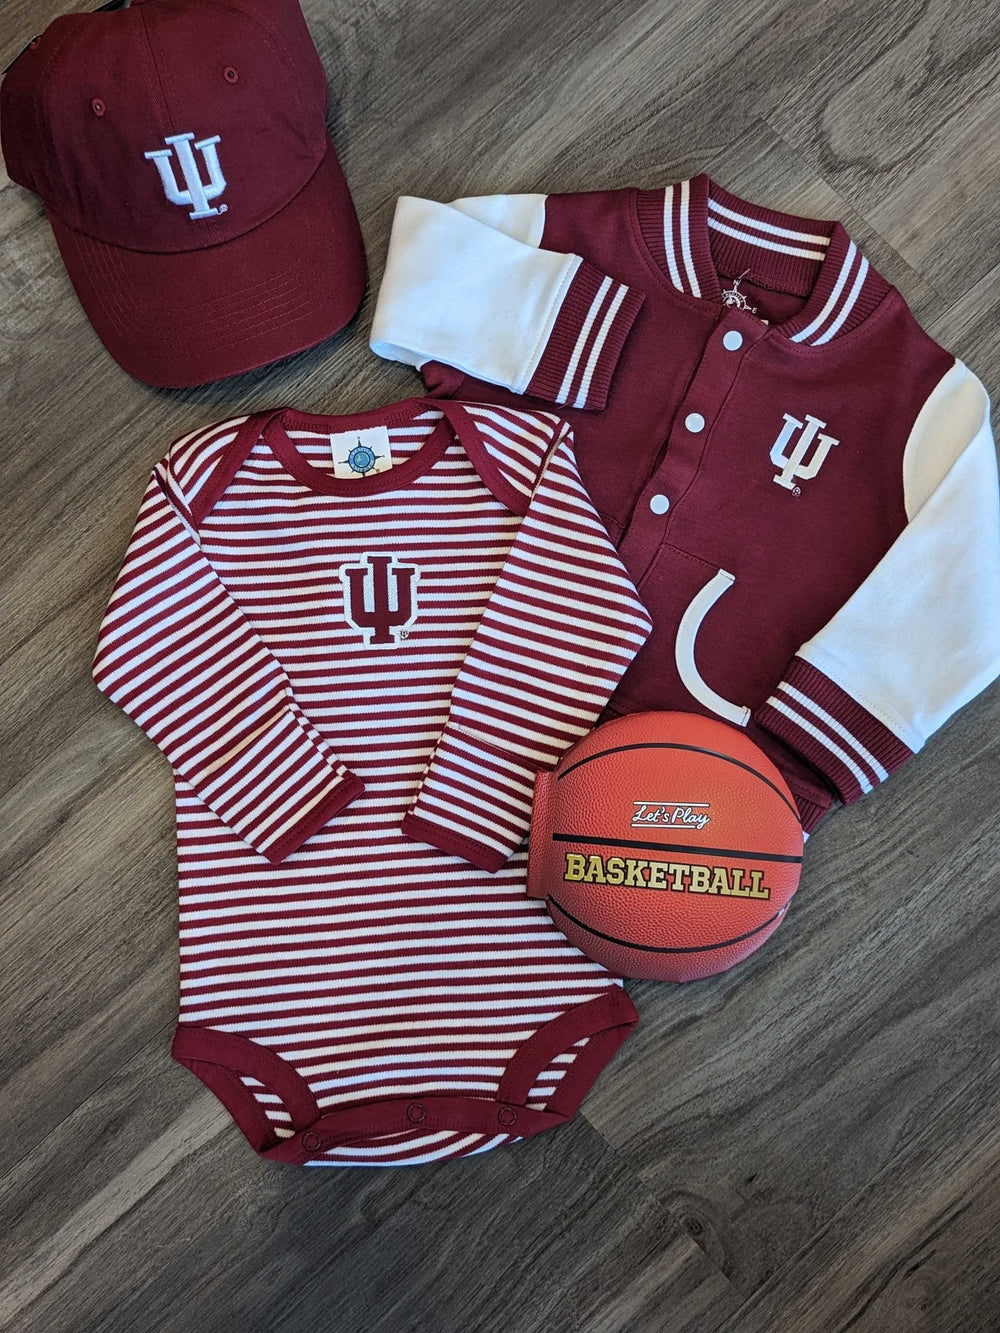 Indiana University baby clothes